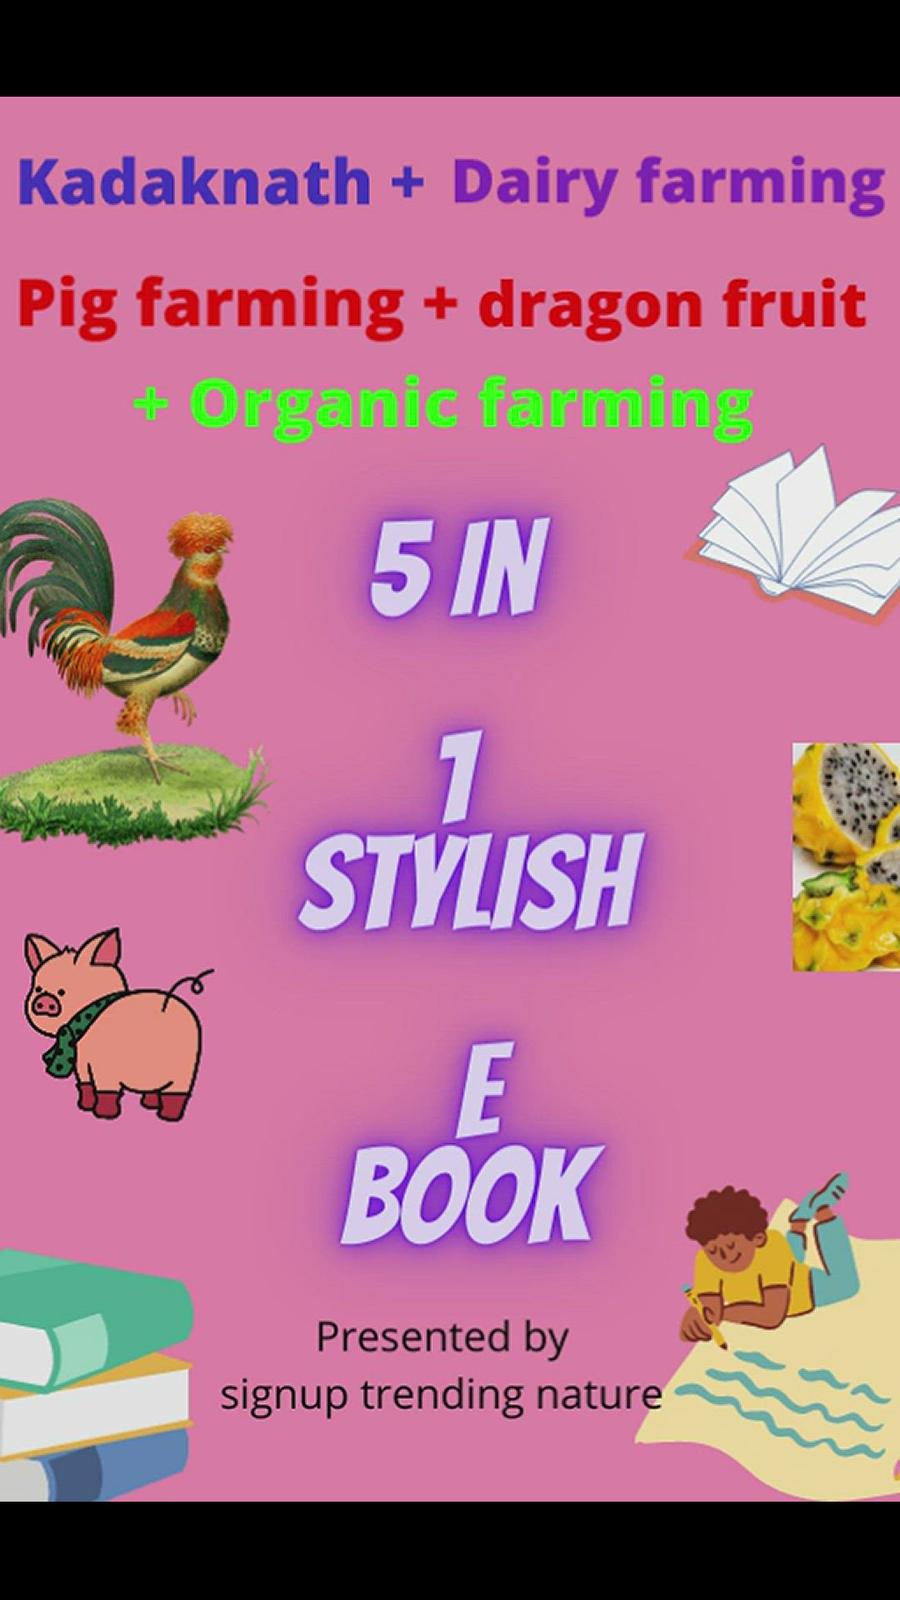 'Video thumbnail for 5 in 1 eBook (buy from top menu bar) = Kadaknath + Pig + Dairy farming + Dragon fruit + Organic farming'